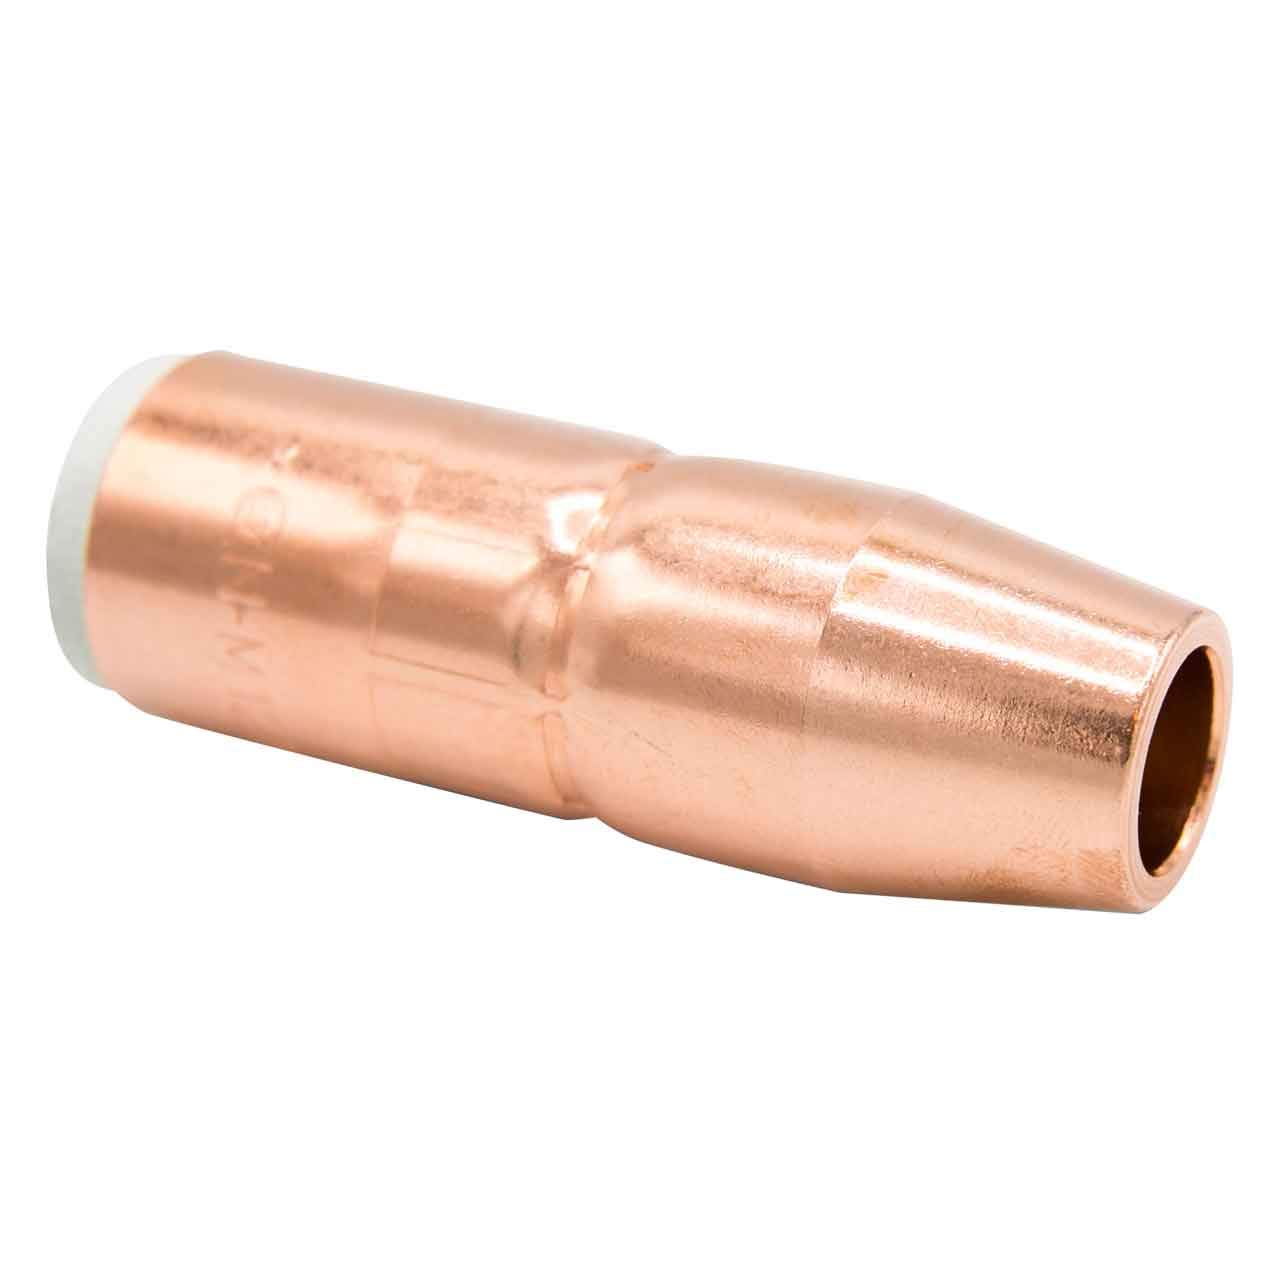 Miller N-M1218C AccuLock MDX Thread-On Nozzle, 1/2" Orifice, 1/8" Tip Recess, Copper, 10 pack